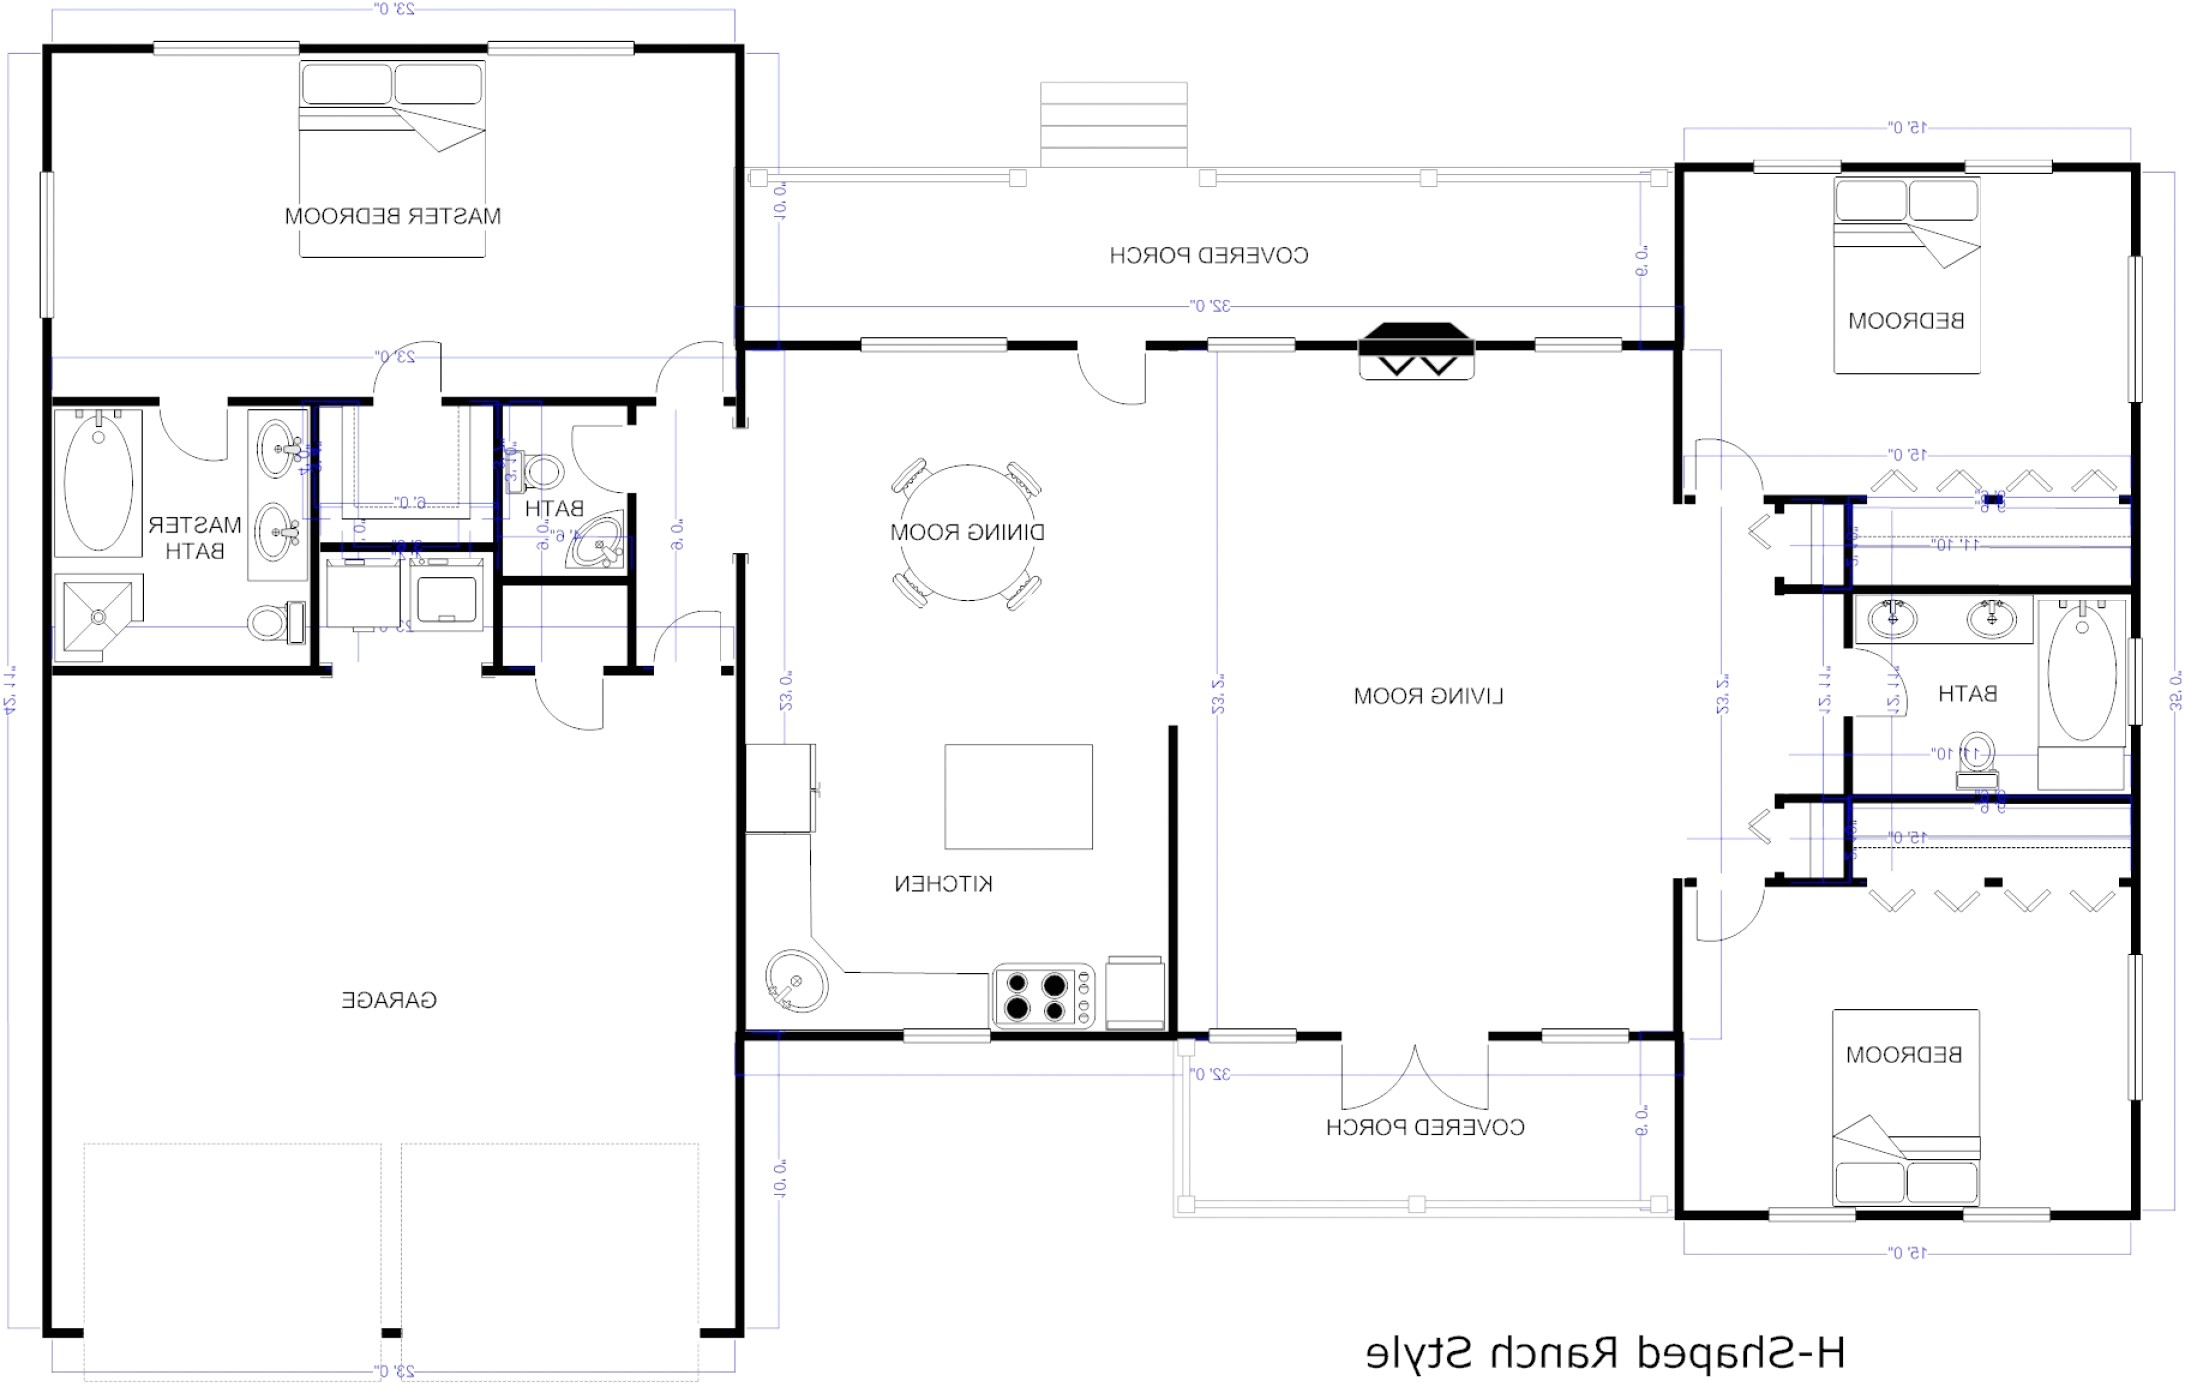 design your own house floor plans